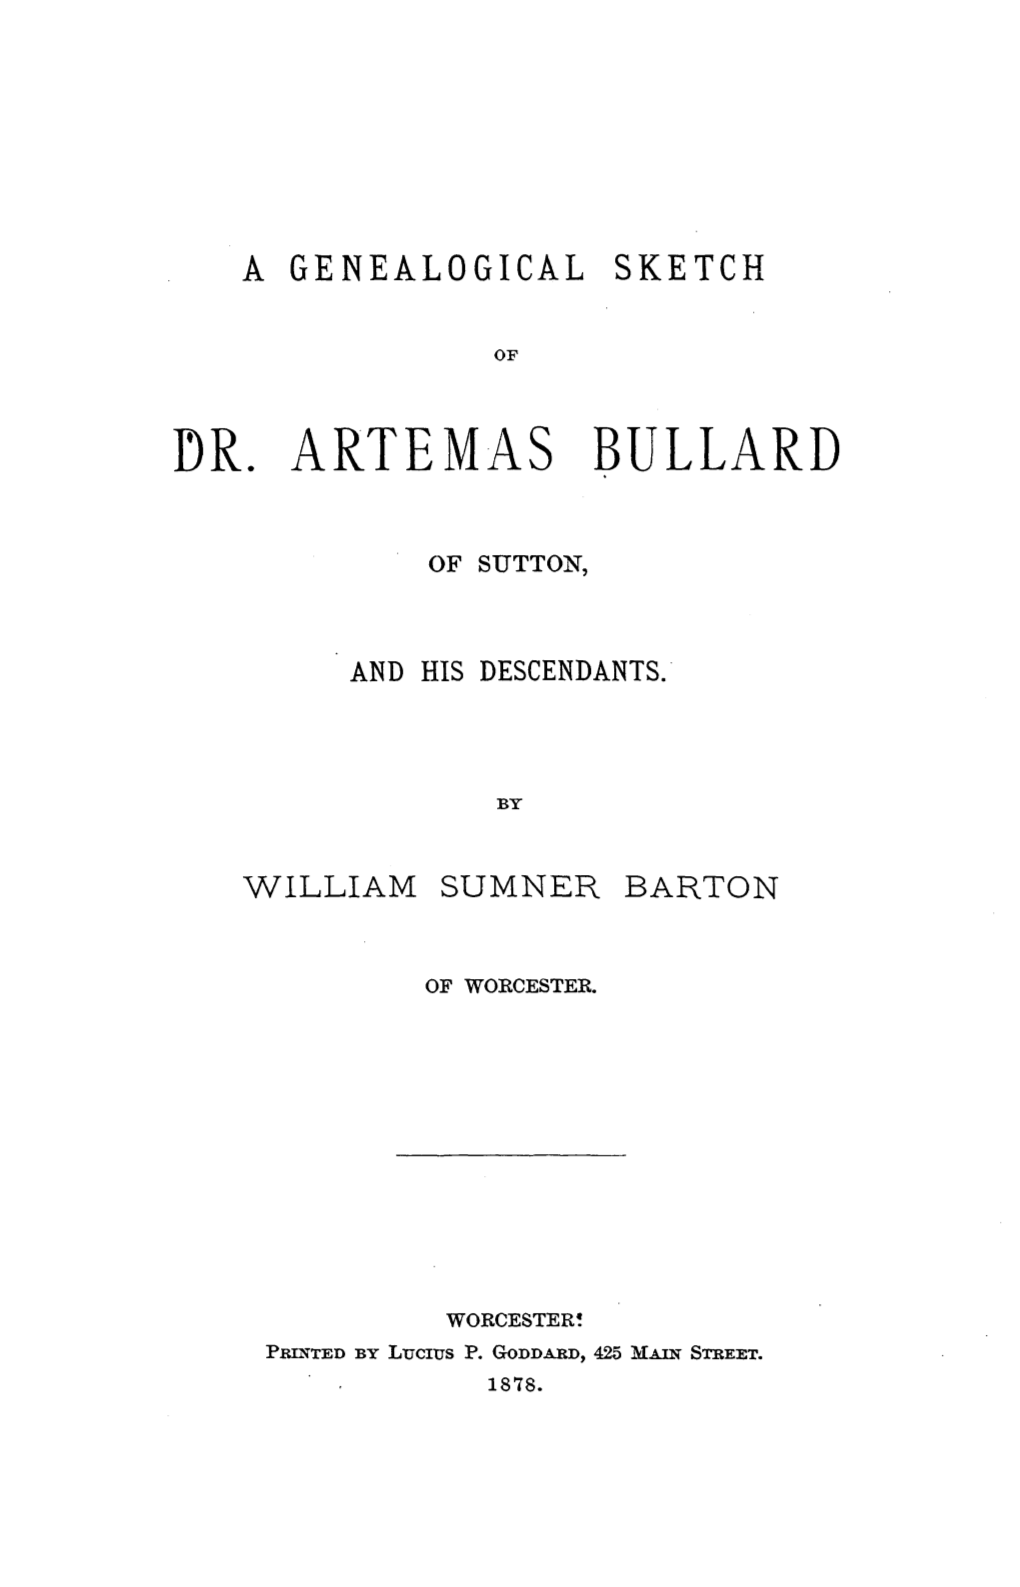 Or. Artemas Bullard